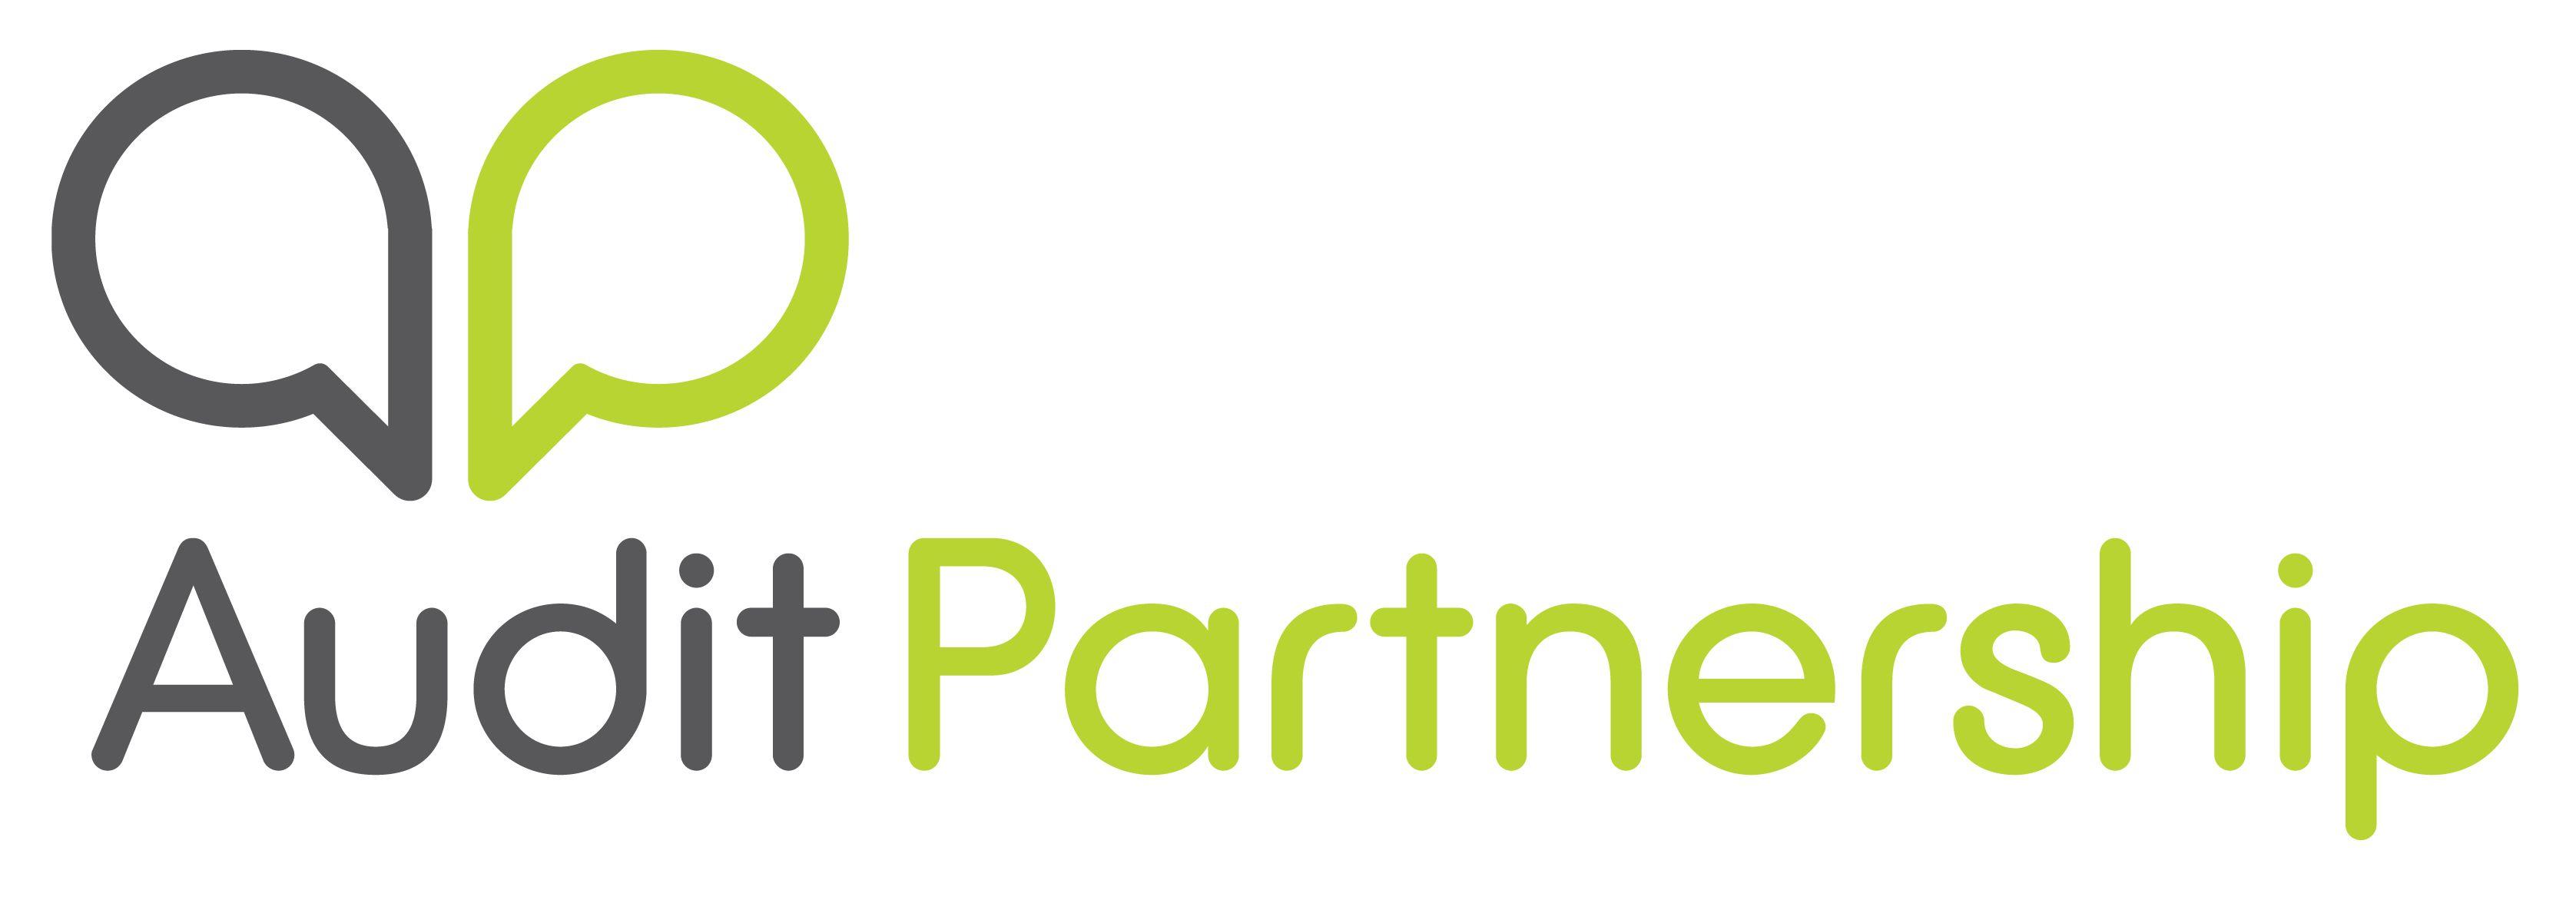 Audit Logo - Audit Partnership Home